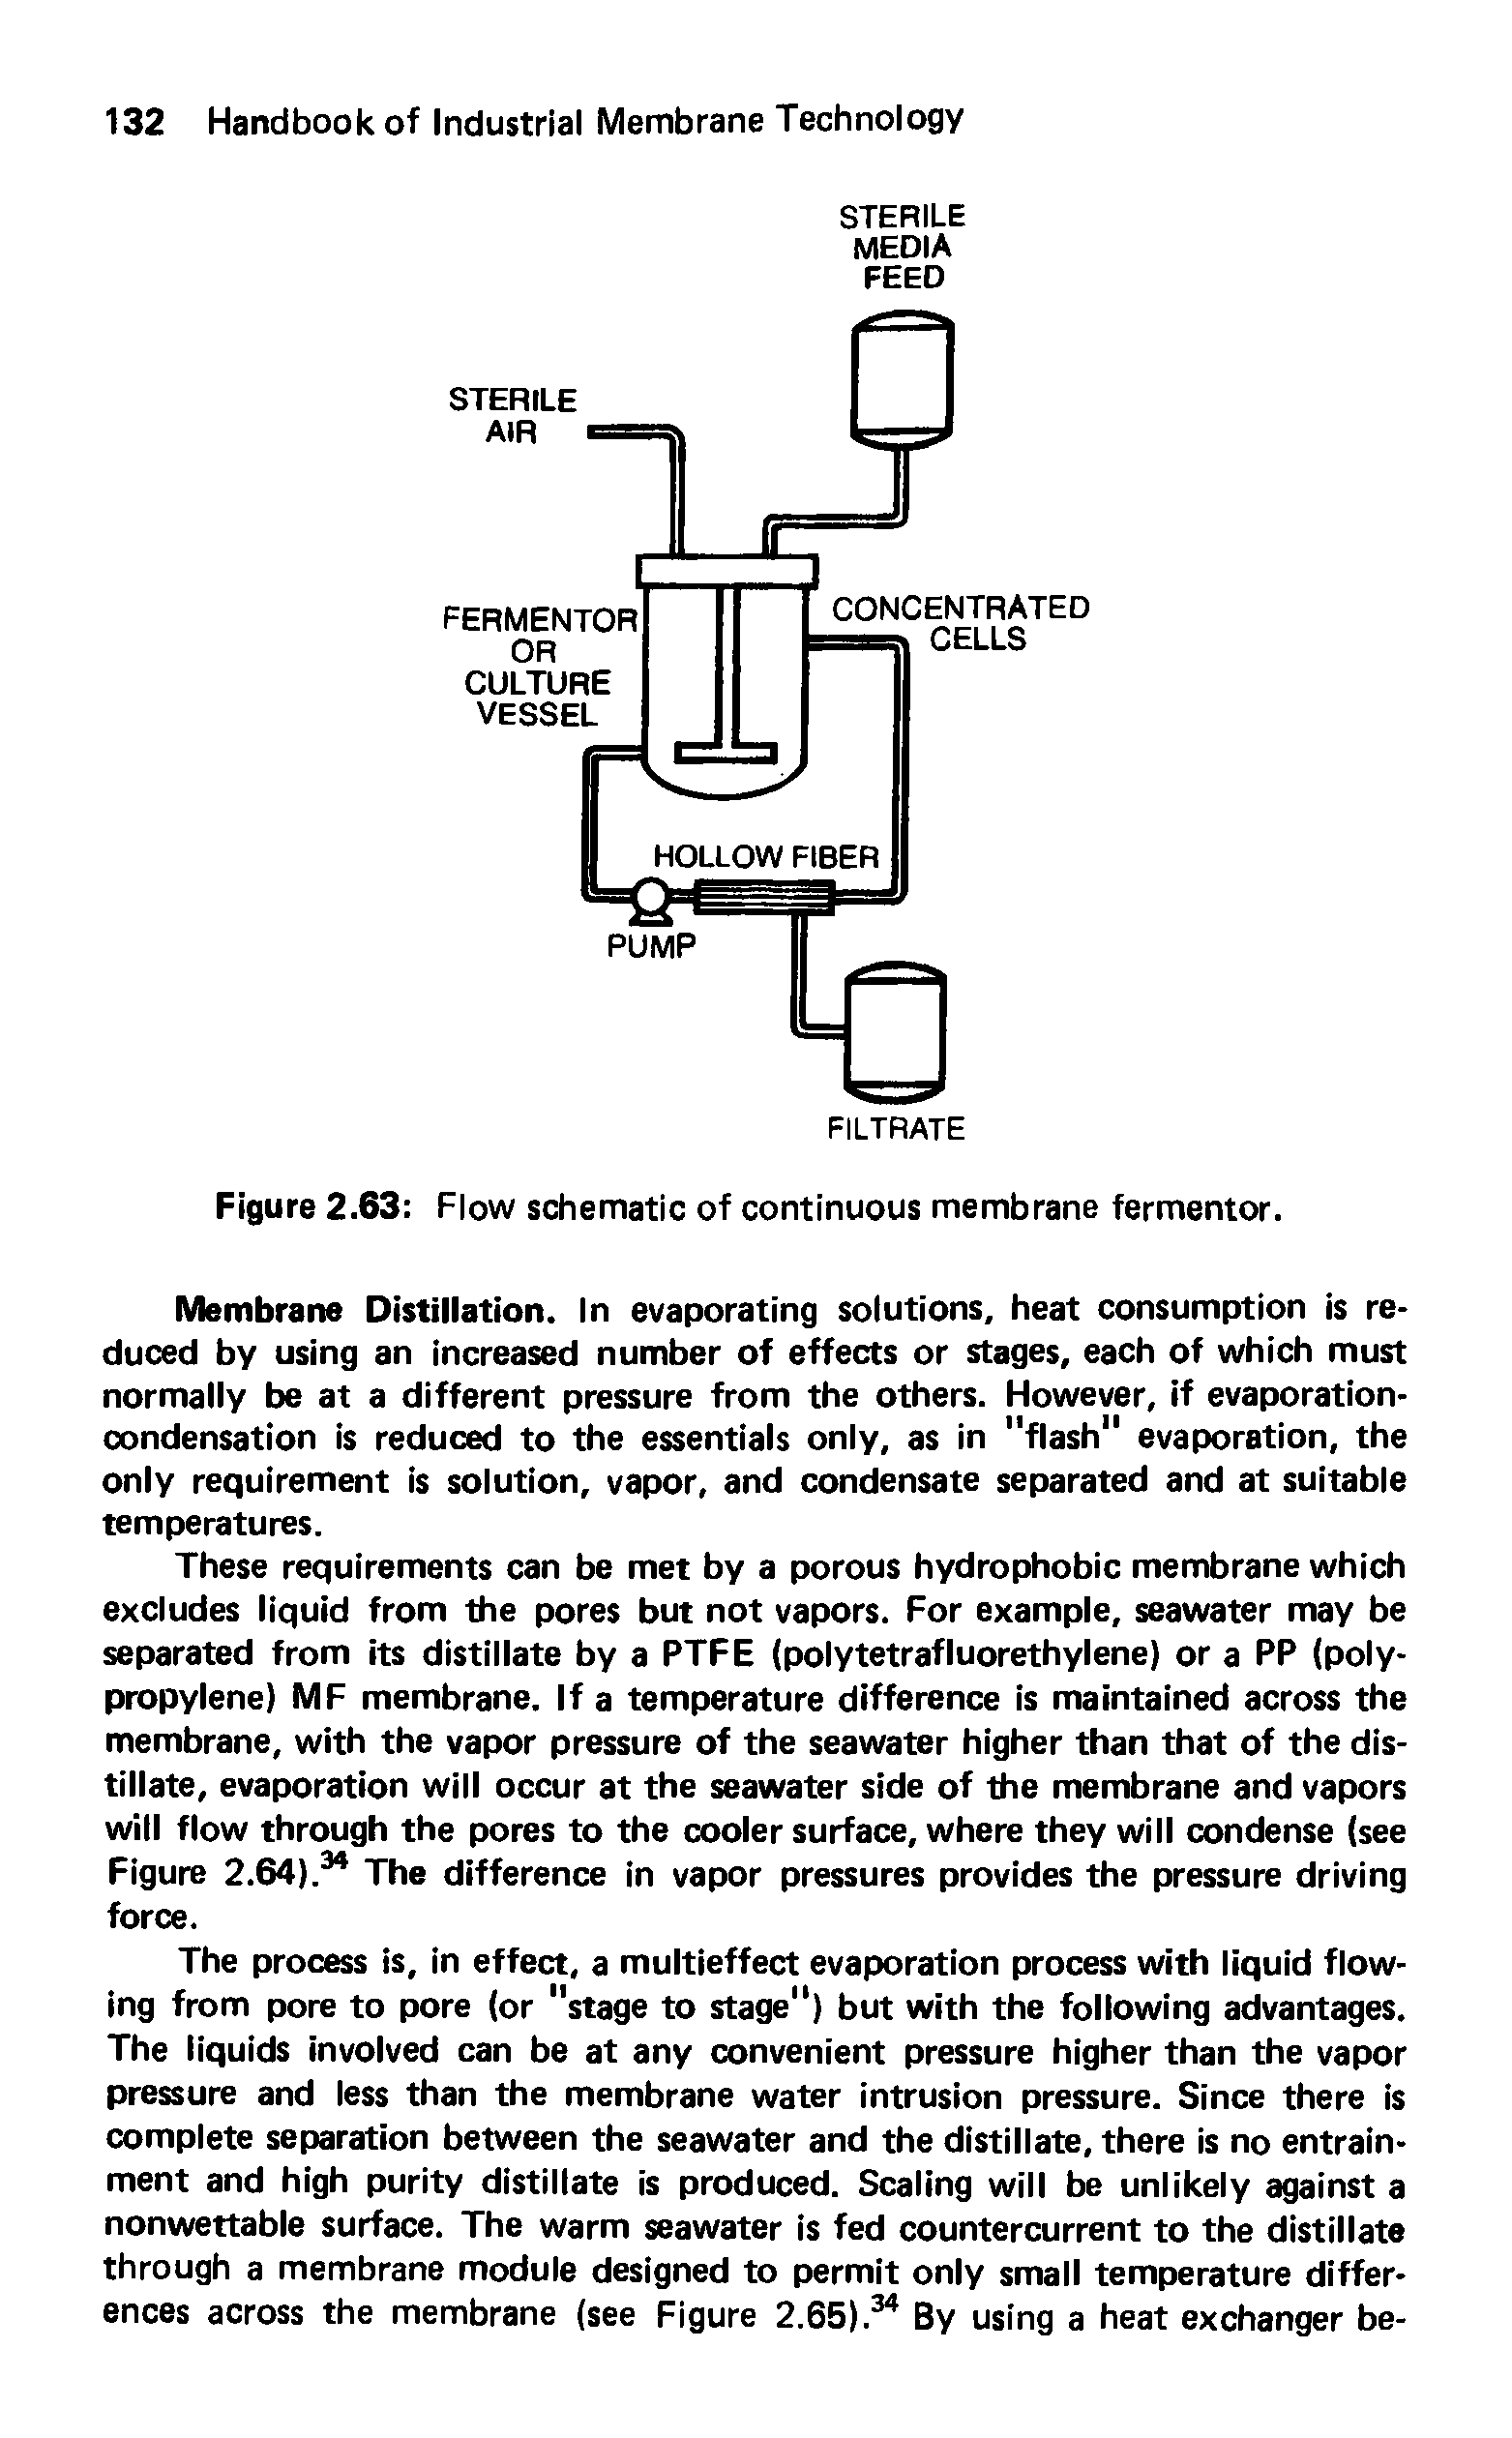 Figure 2.63 Flow schematic of continuous membrane fermentor.